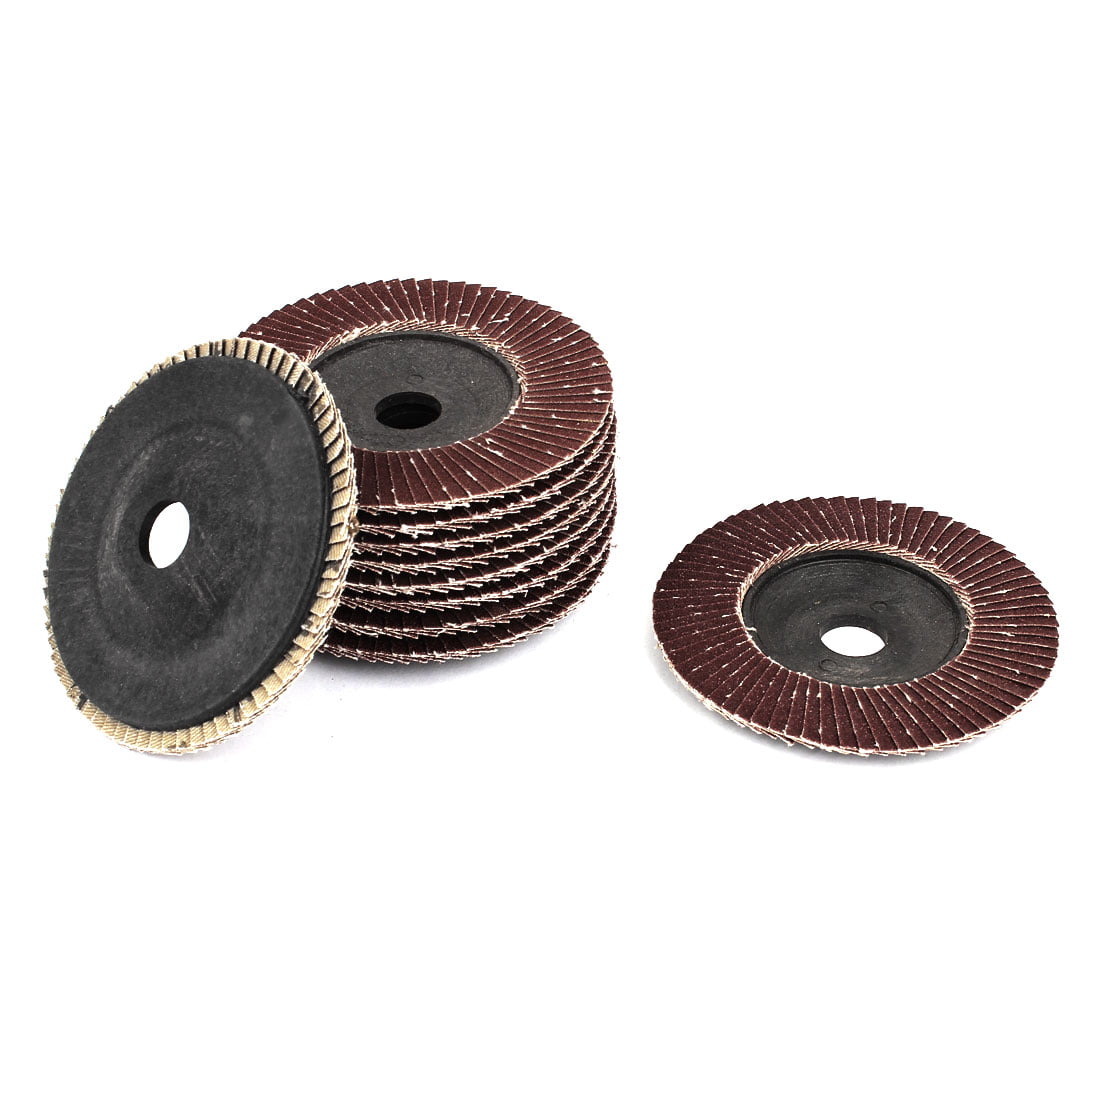 uxcell 100mm Dia 180 Grit Flap Sanding Discs Polishing Buffing Wheels